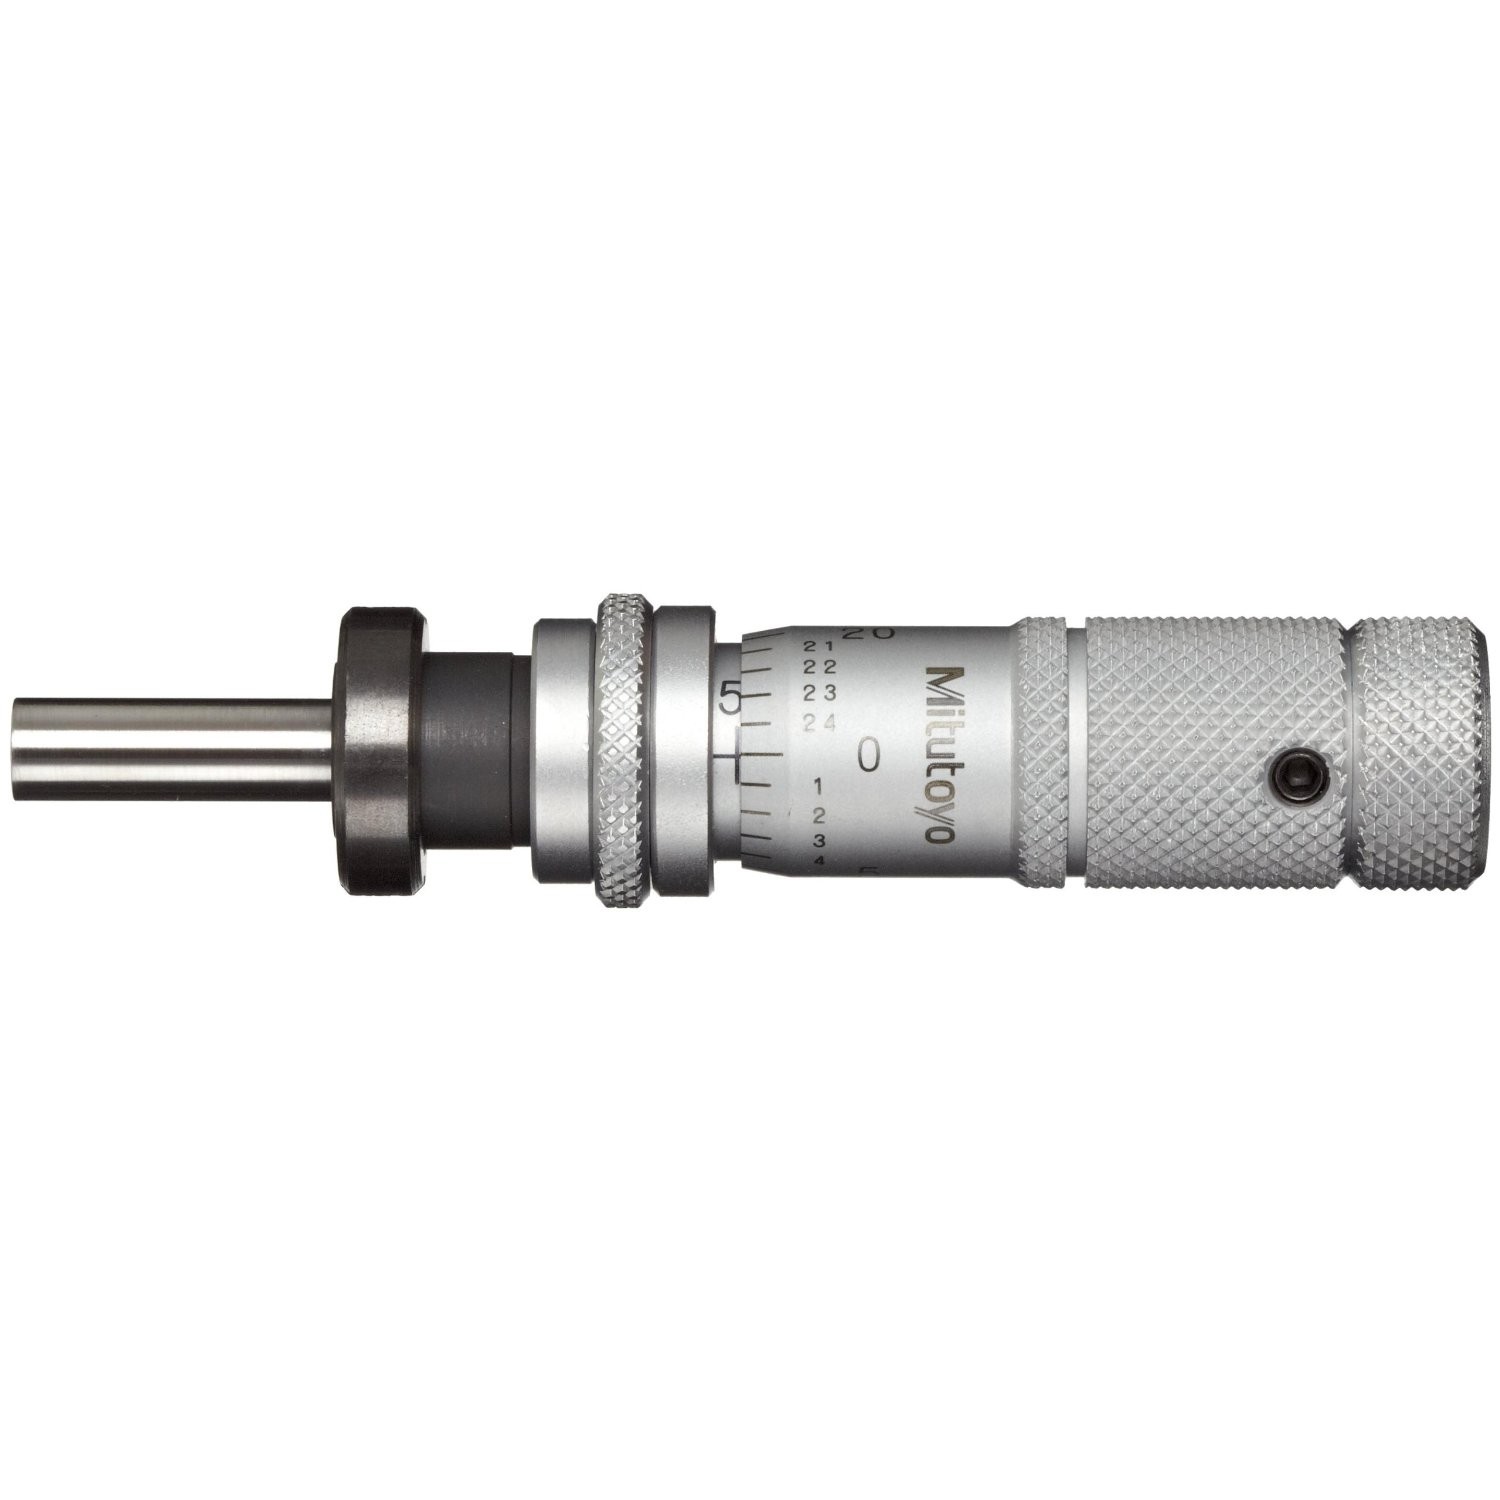 +/-0.0001 Accuracy Lock Nut Starrett 363FL Digital Micrometer Head 0-1 Range 0.001 Graduation Friction Thimble 